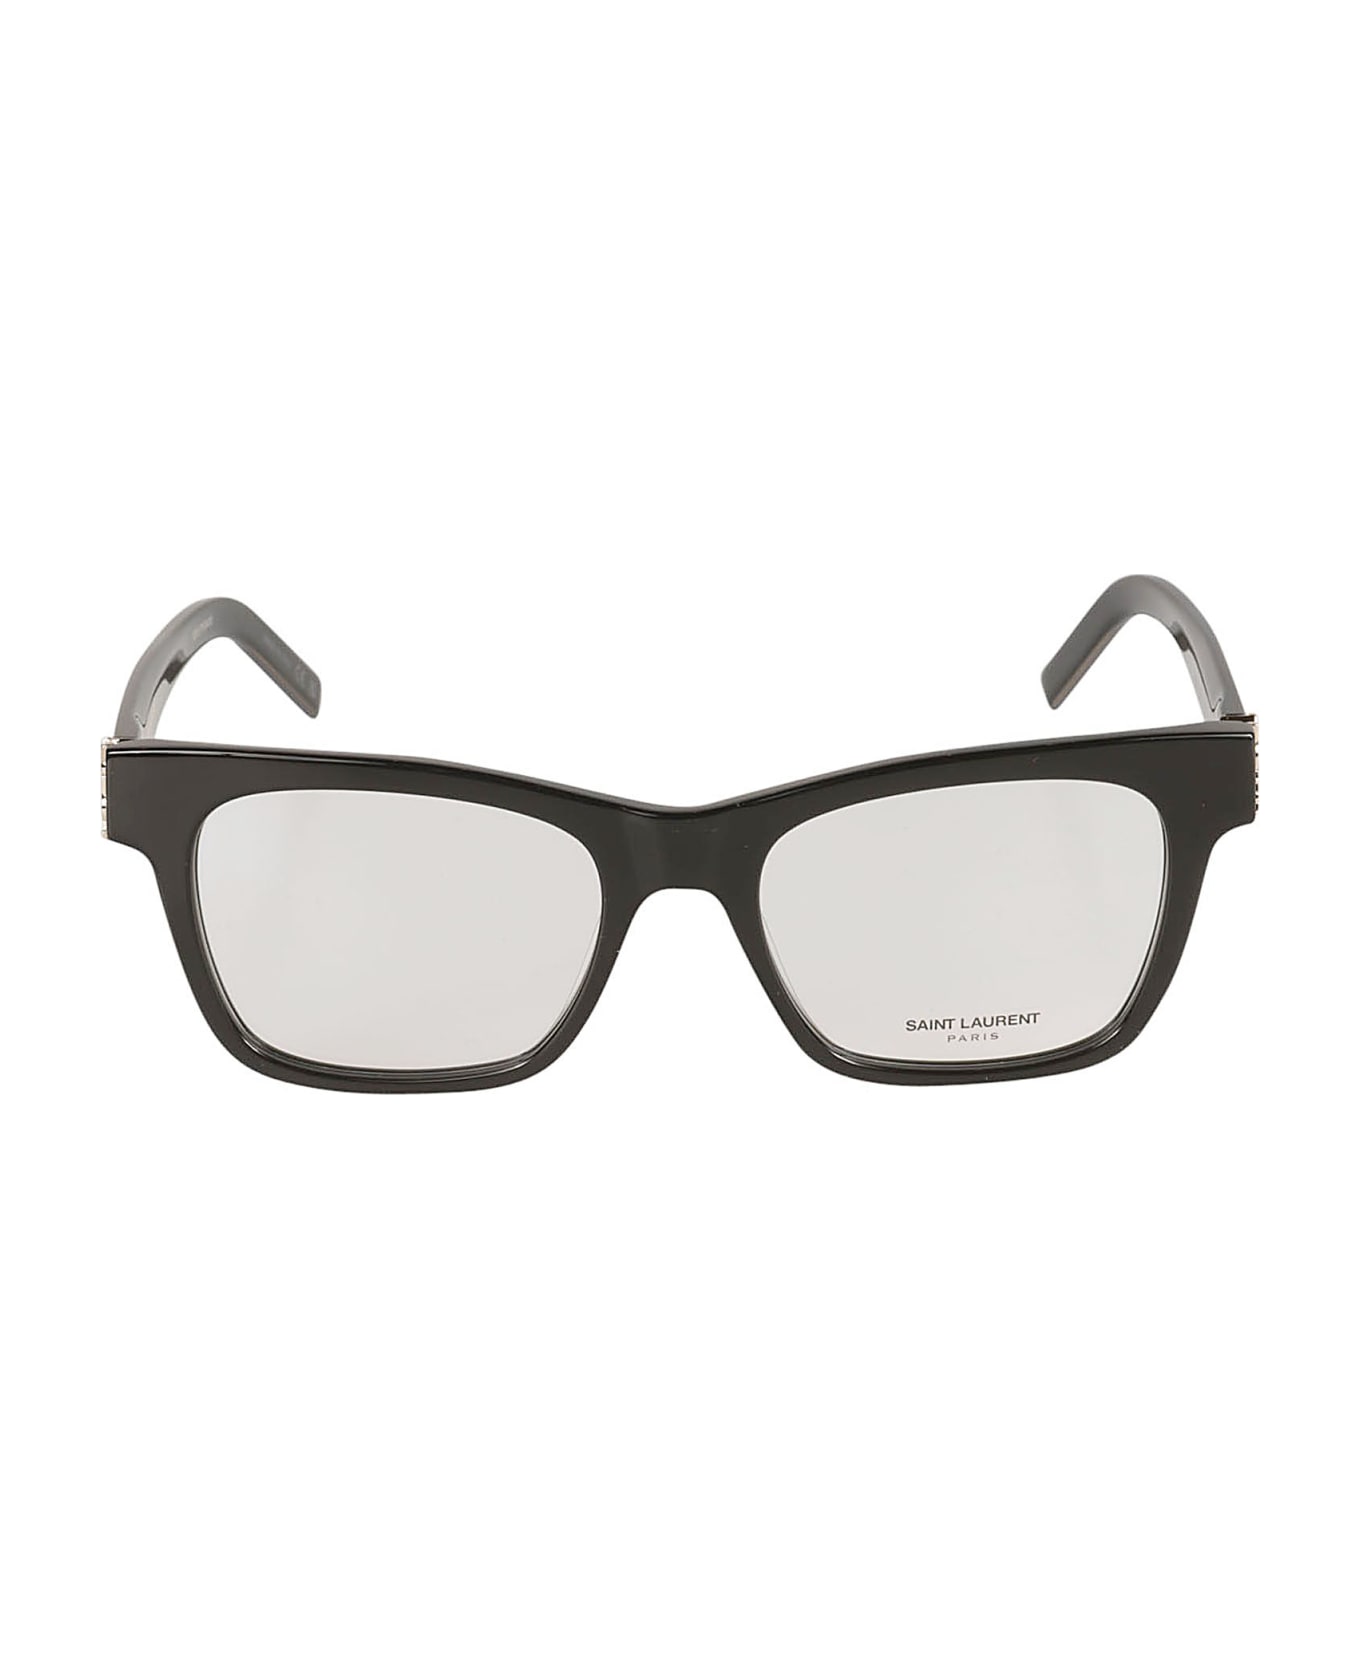 Saint Laurent Eyewear M118 Frame - 001 black black transpare